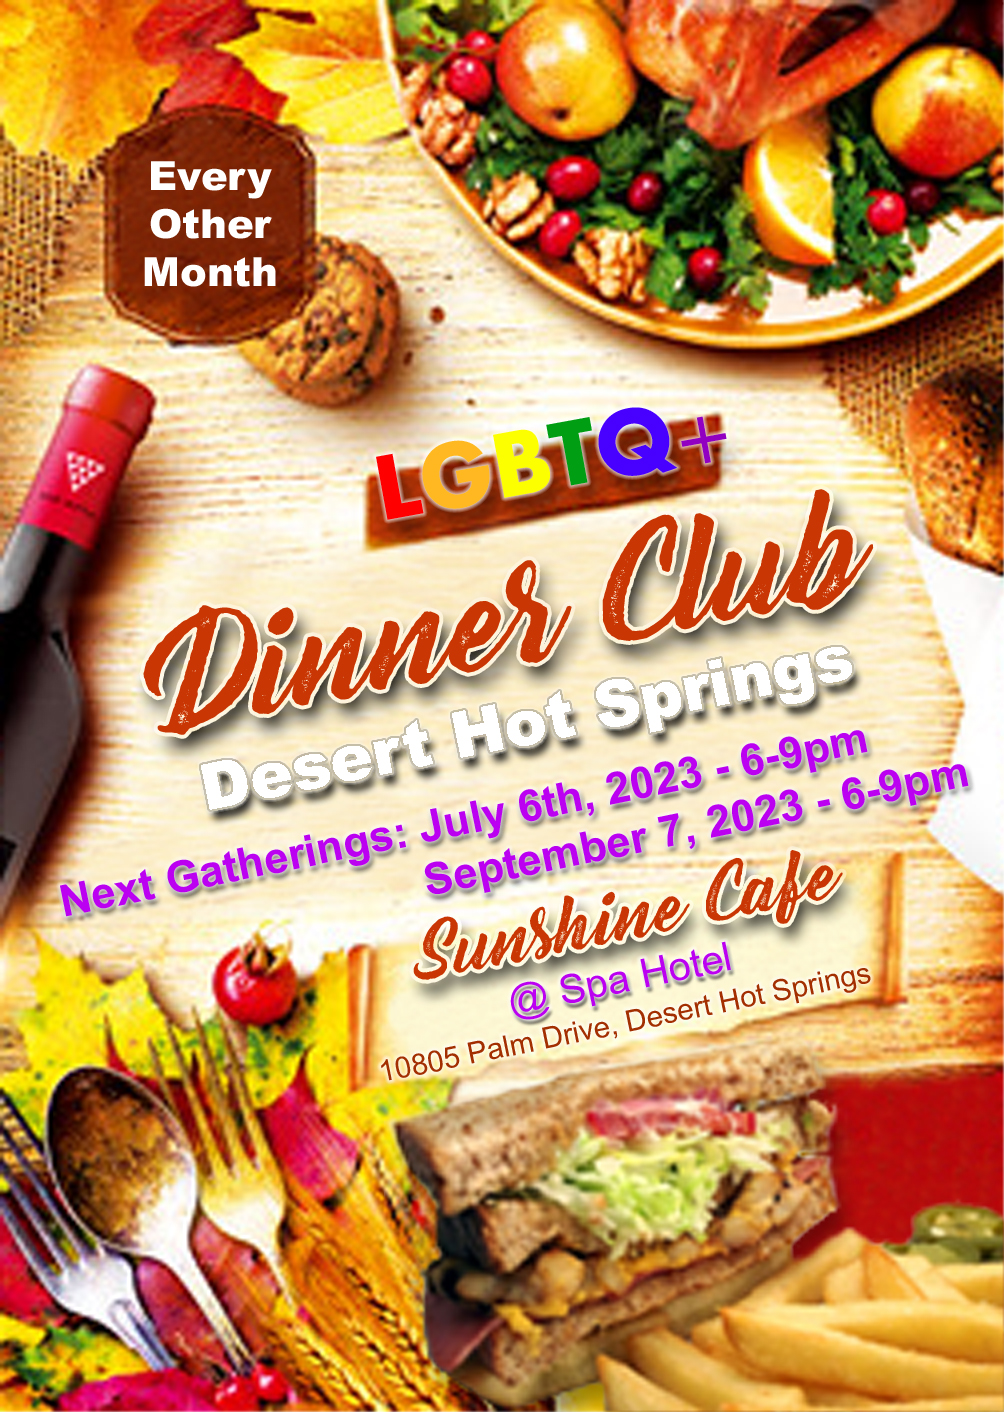 Desert Hot Springs LGBTQ+ Dinner Club